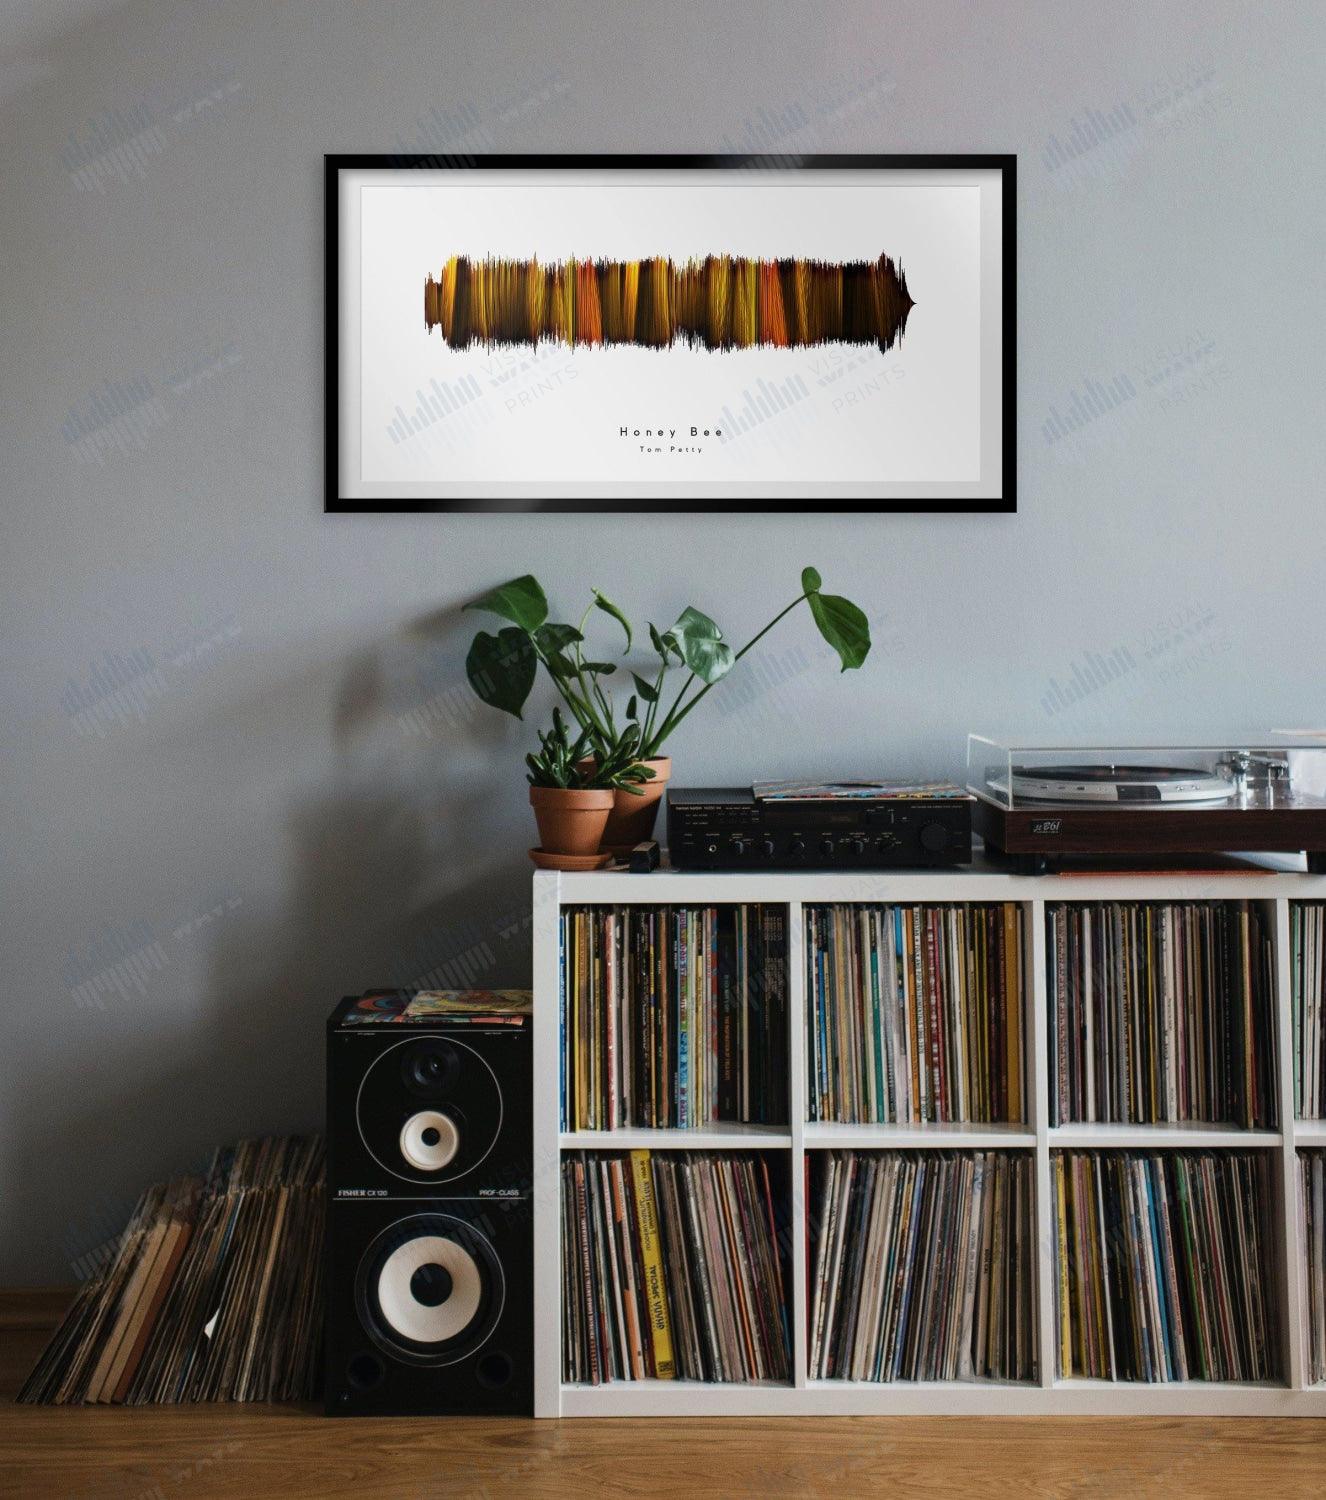 Honey Bee by Tom Petty - Visual Wave Prints